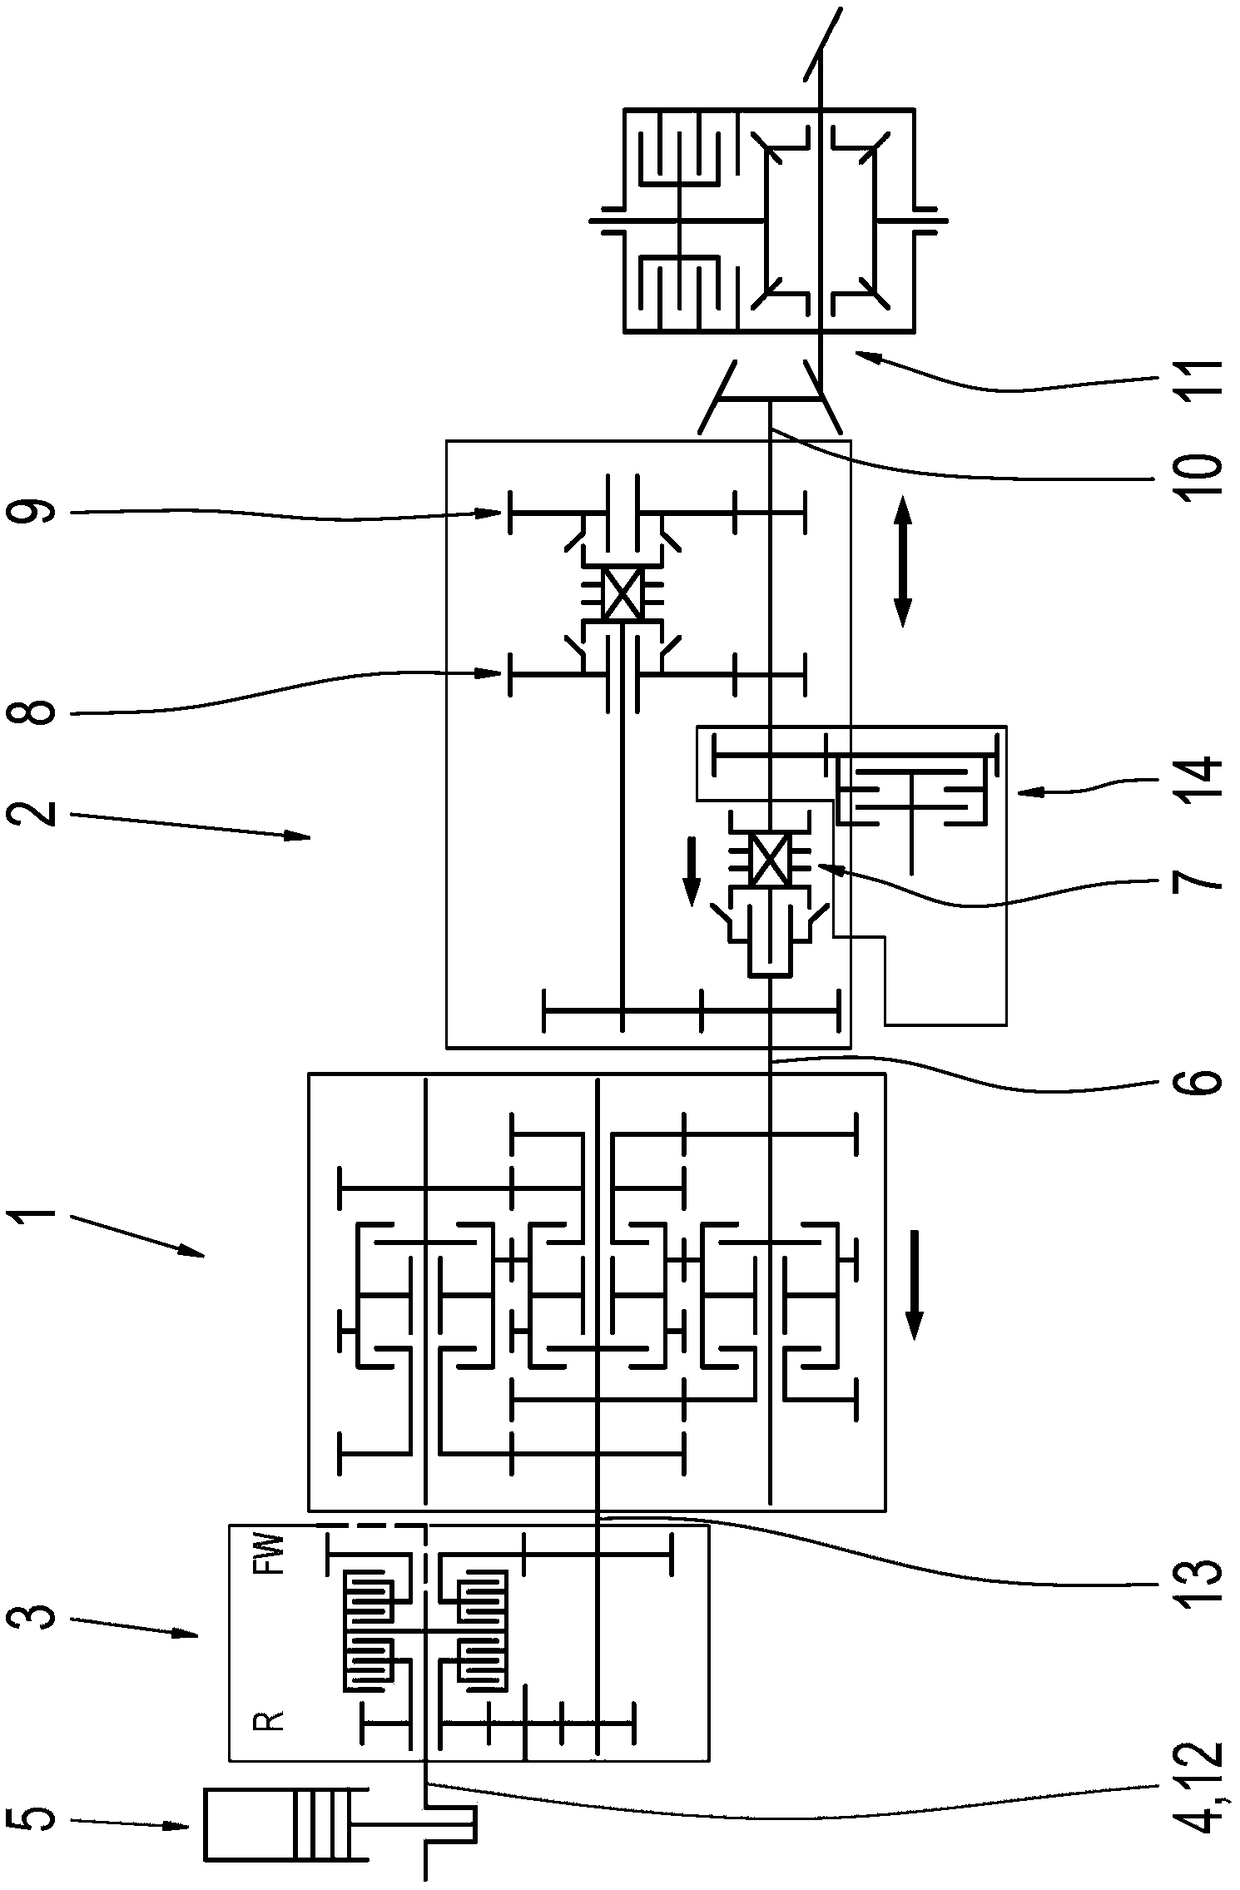 Transmission arrangement for commercial vehicle